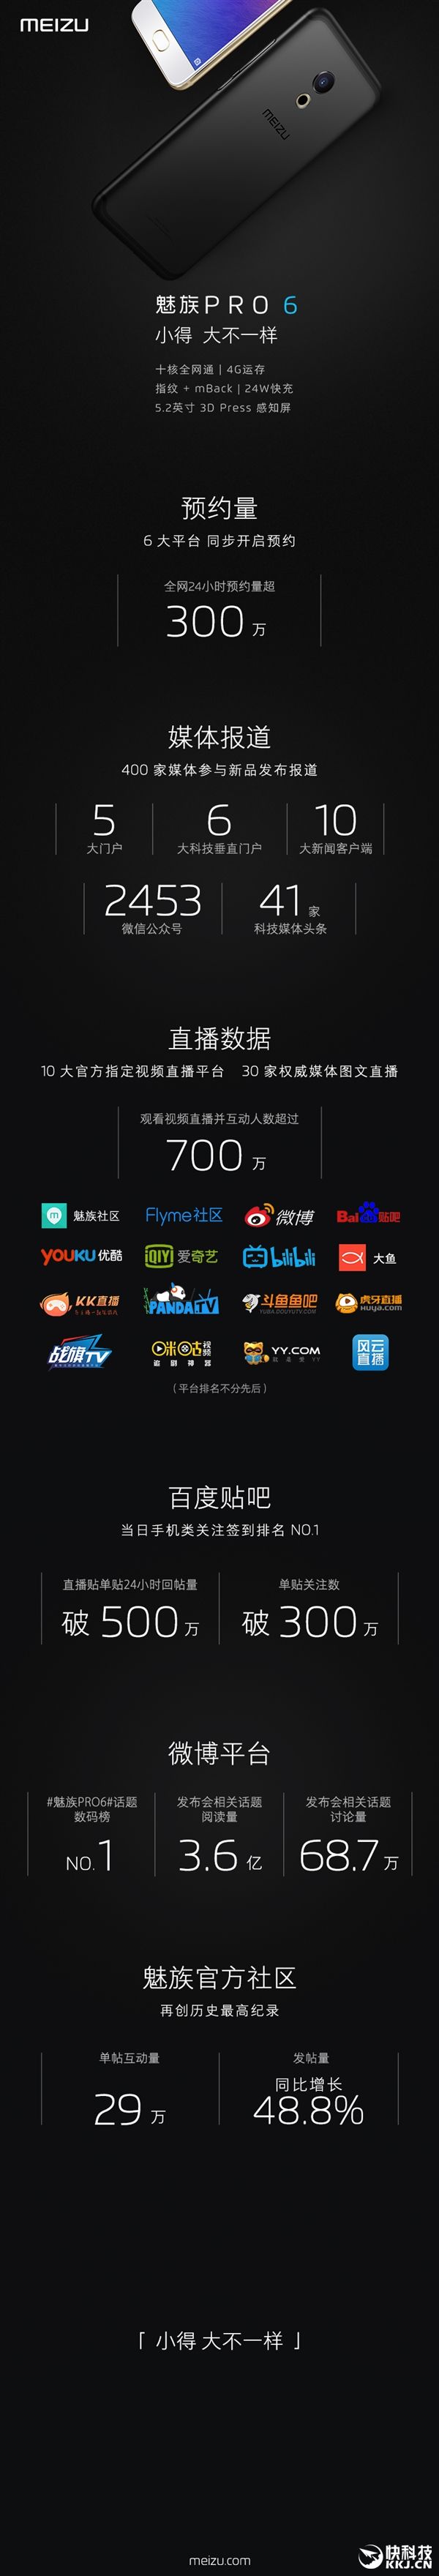 Meizu Pro 6 собрал 3 миллиона предзаказов за 24 часа, установив новый рекорд компании – фото 2